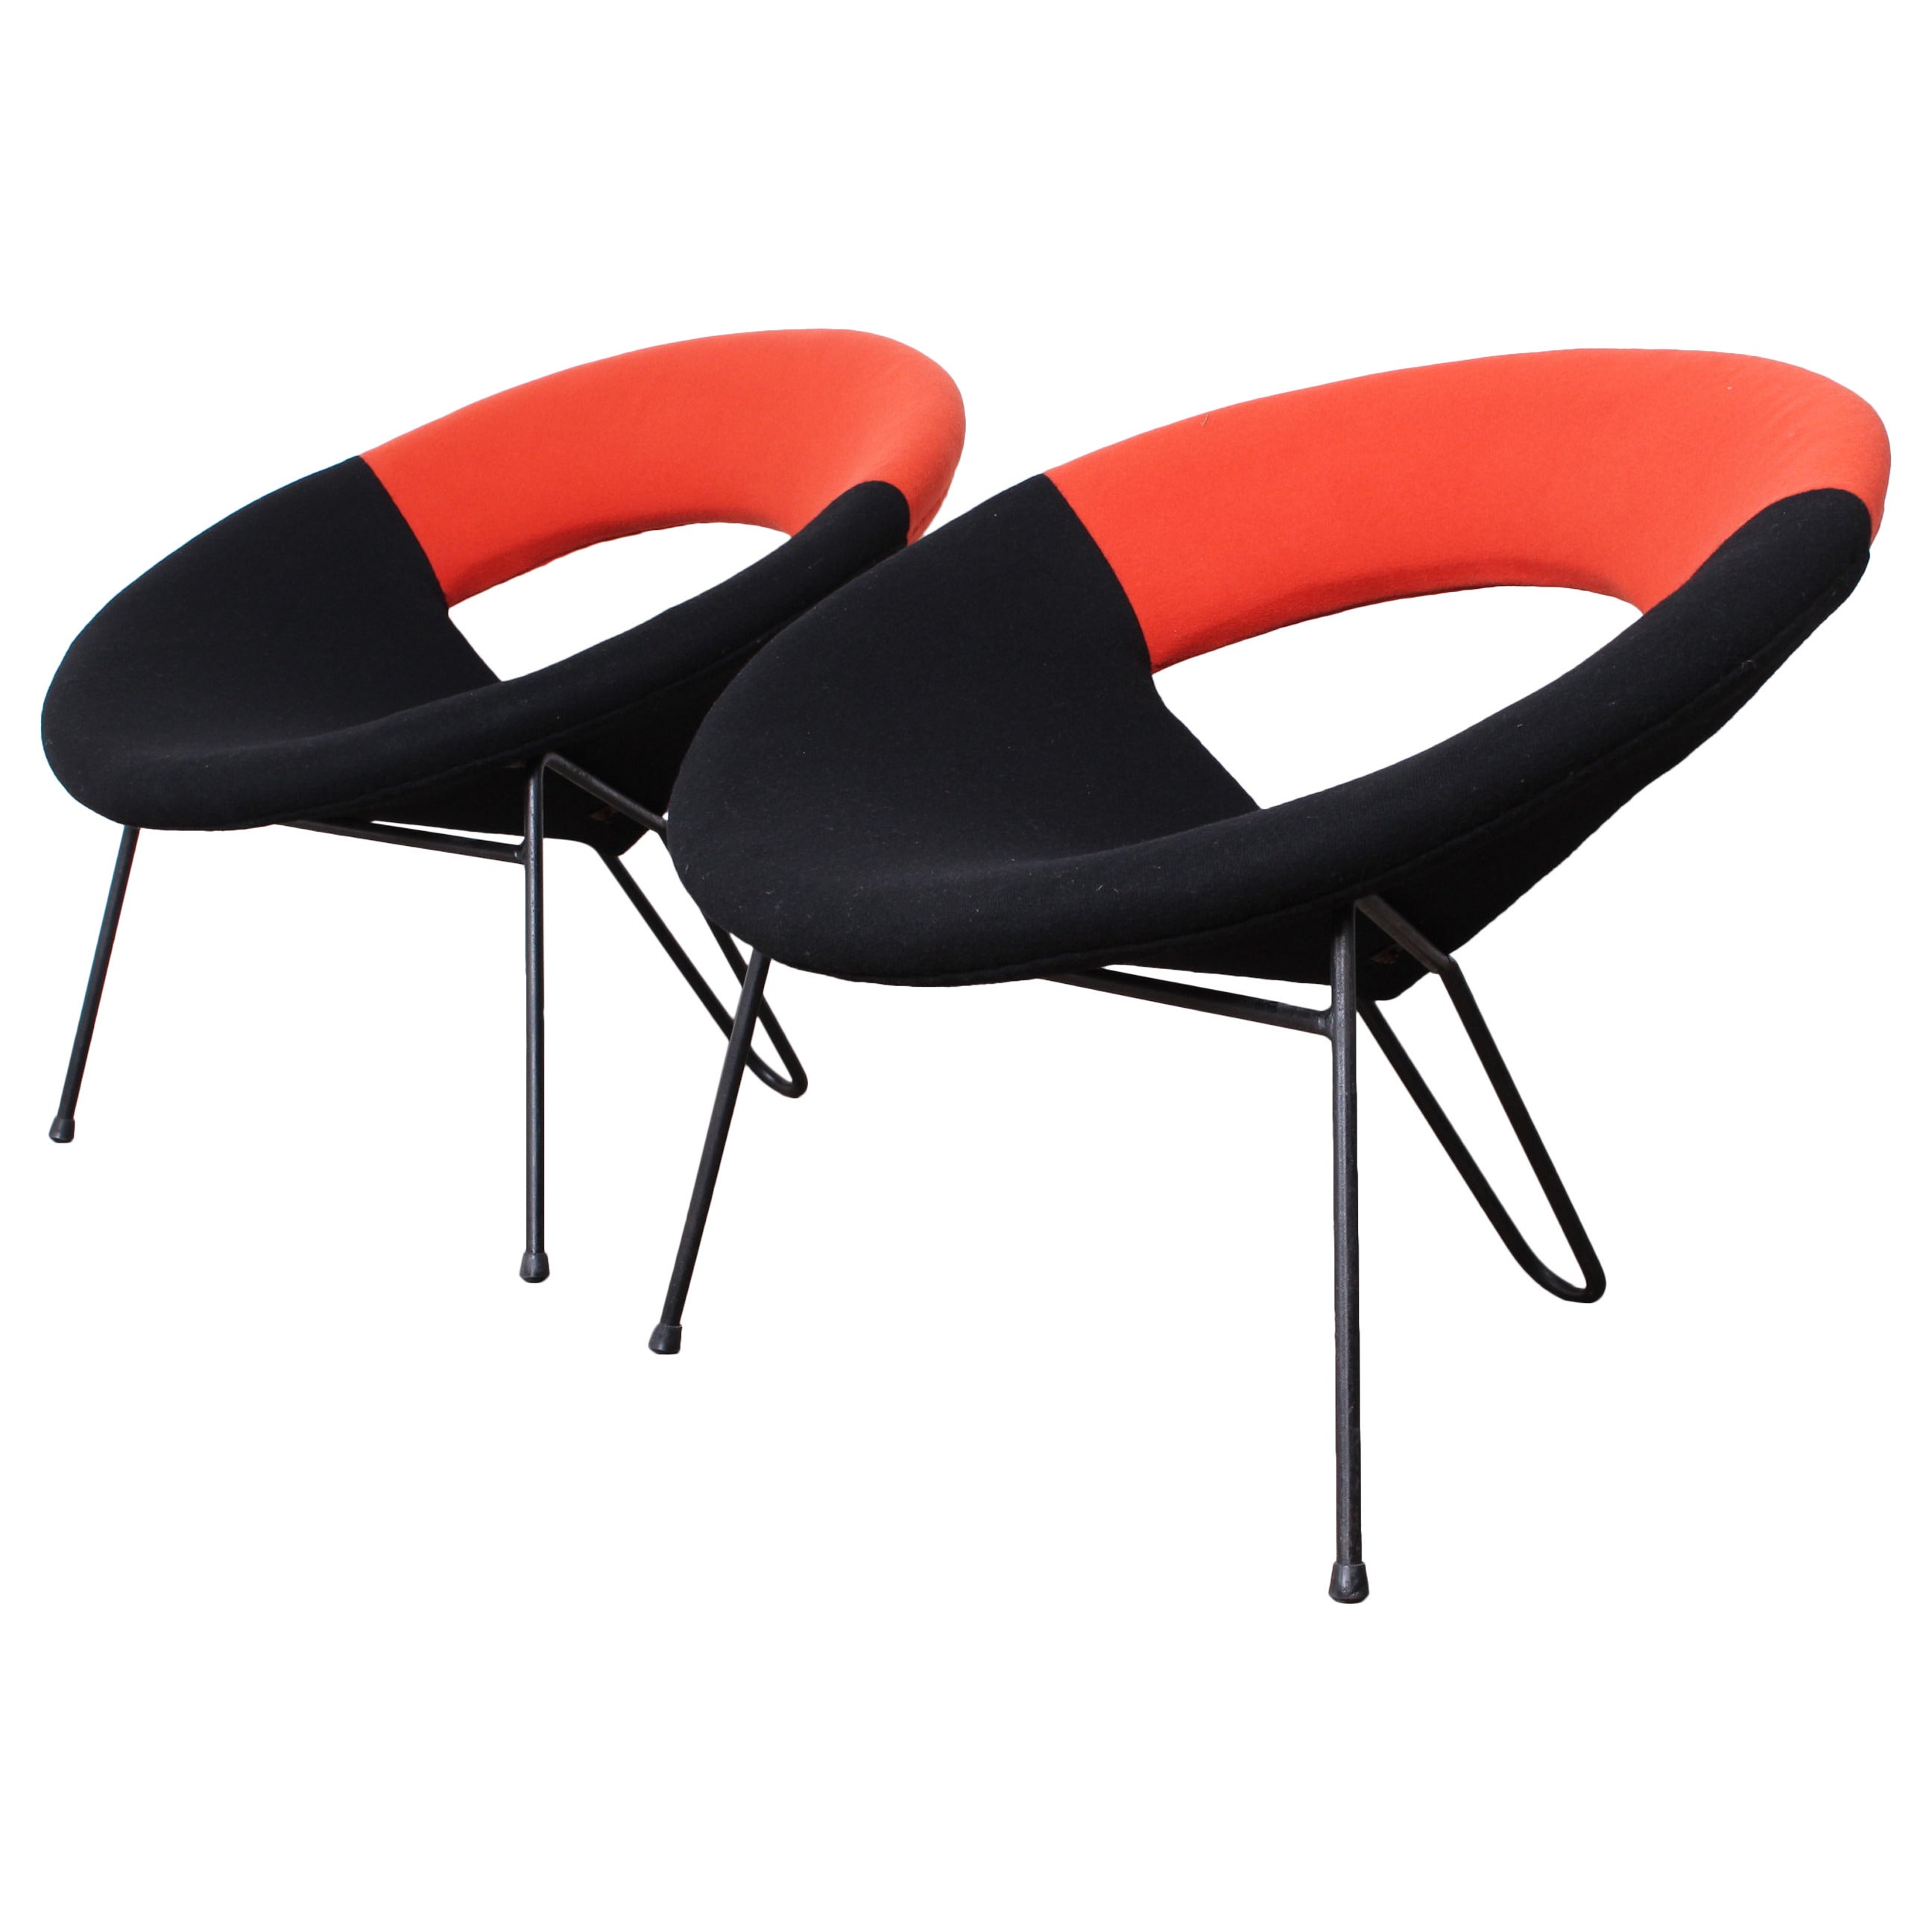 Pair of "Satellite" Lounge Chair by Henri Lancel